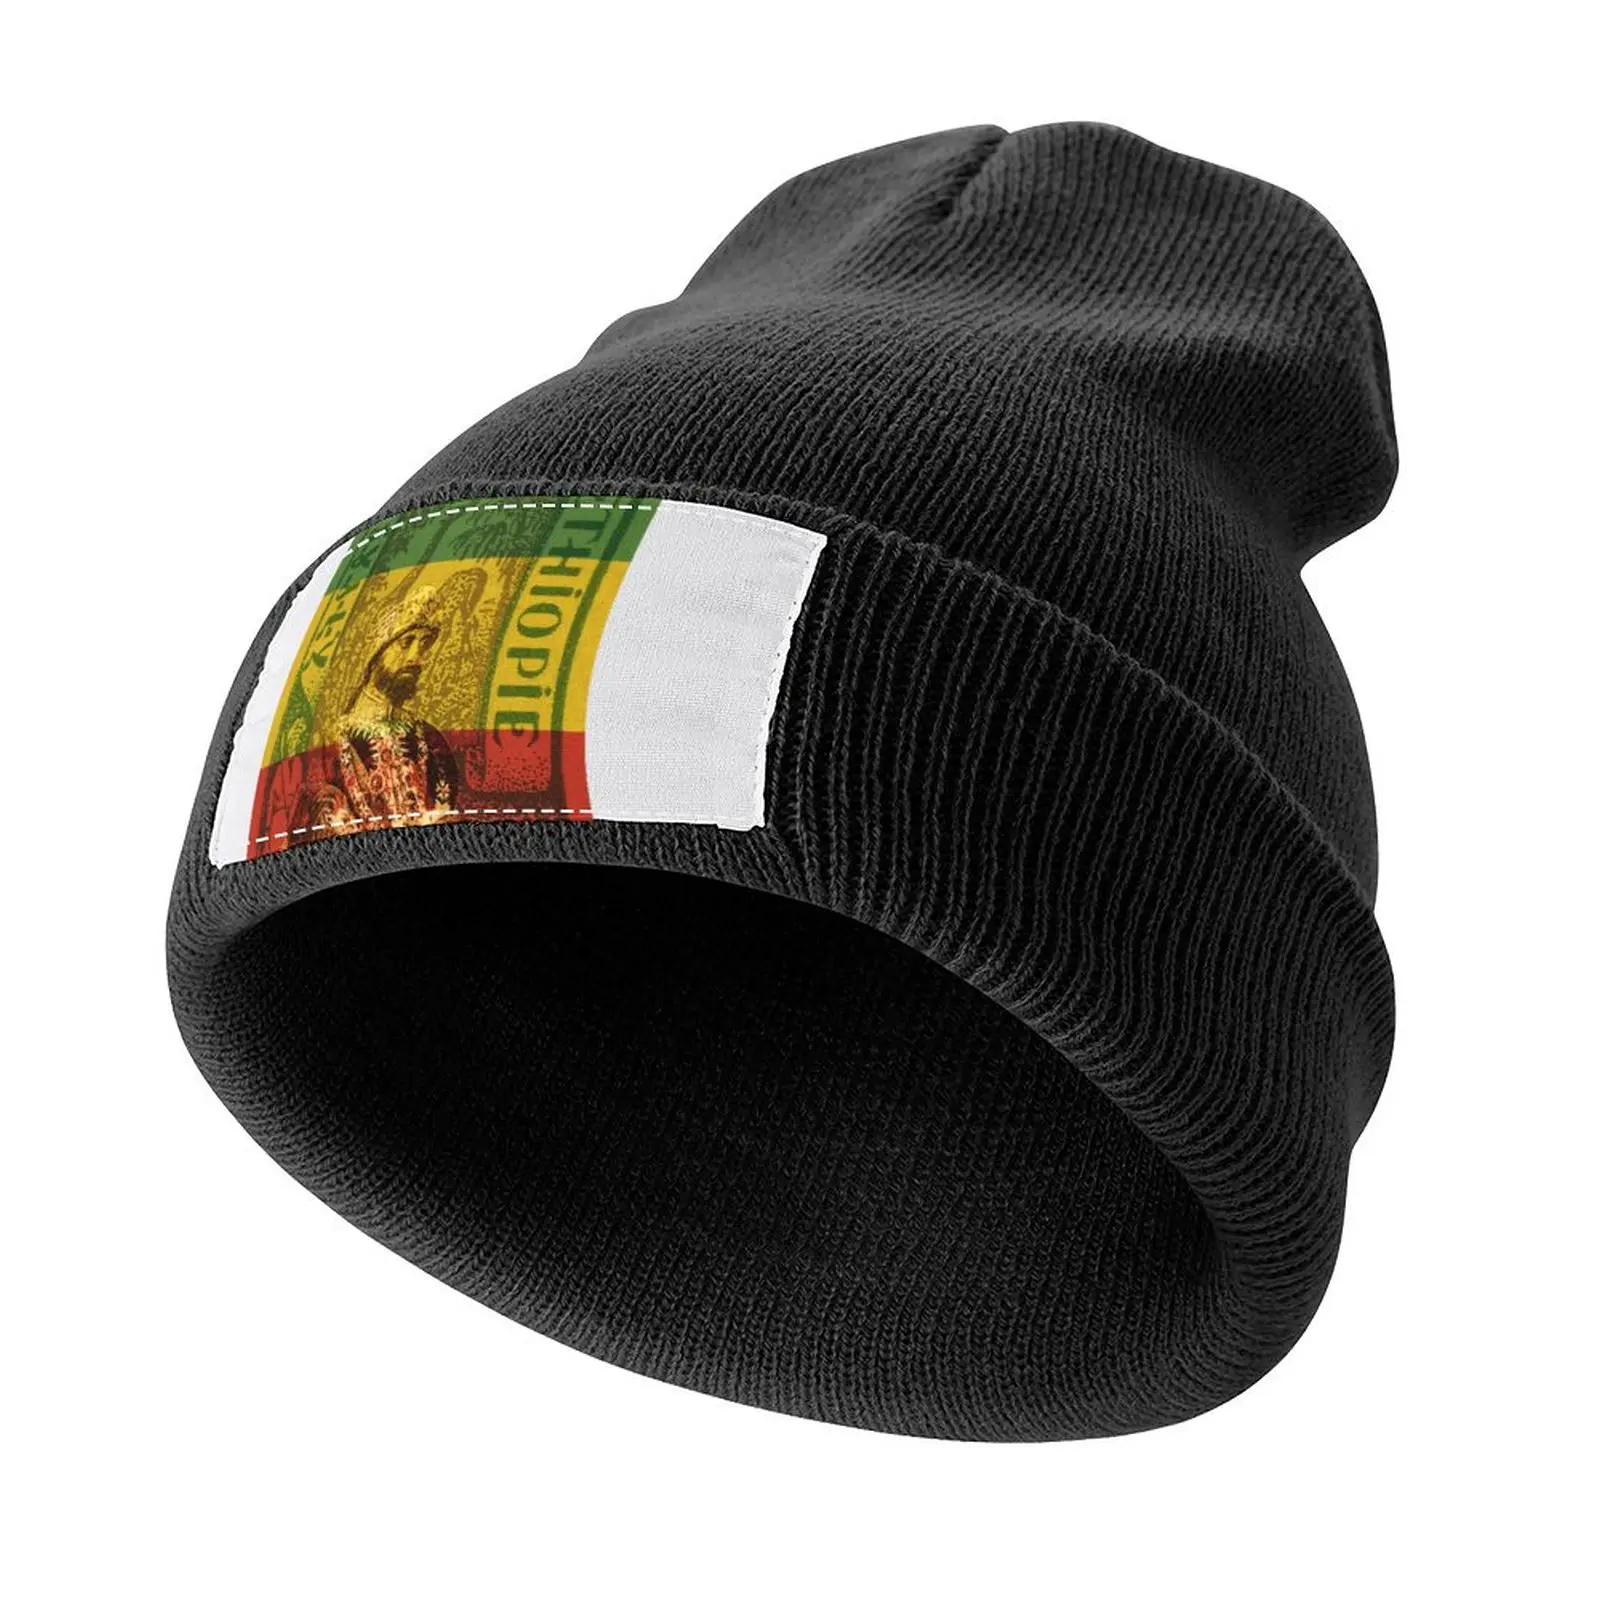 

Haile Selassie Emperor of Ethiopia Knitted Cap dad hat Hats |-F-| New Hat Woman Cap Men's